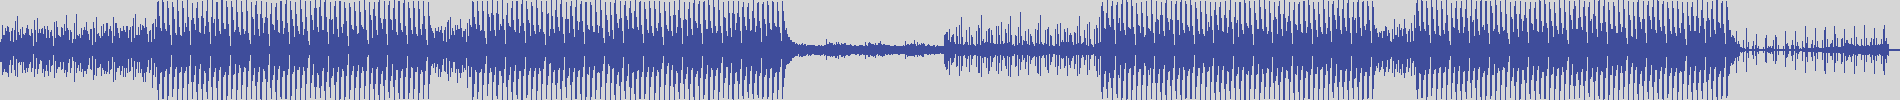 nf_boyz_records [NFY070] Blue Verhanda - Orcadi [Pacific Mix] audio wave form